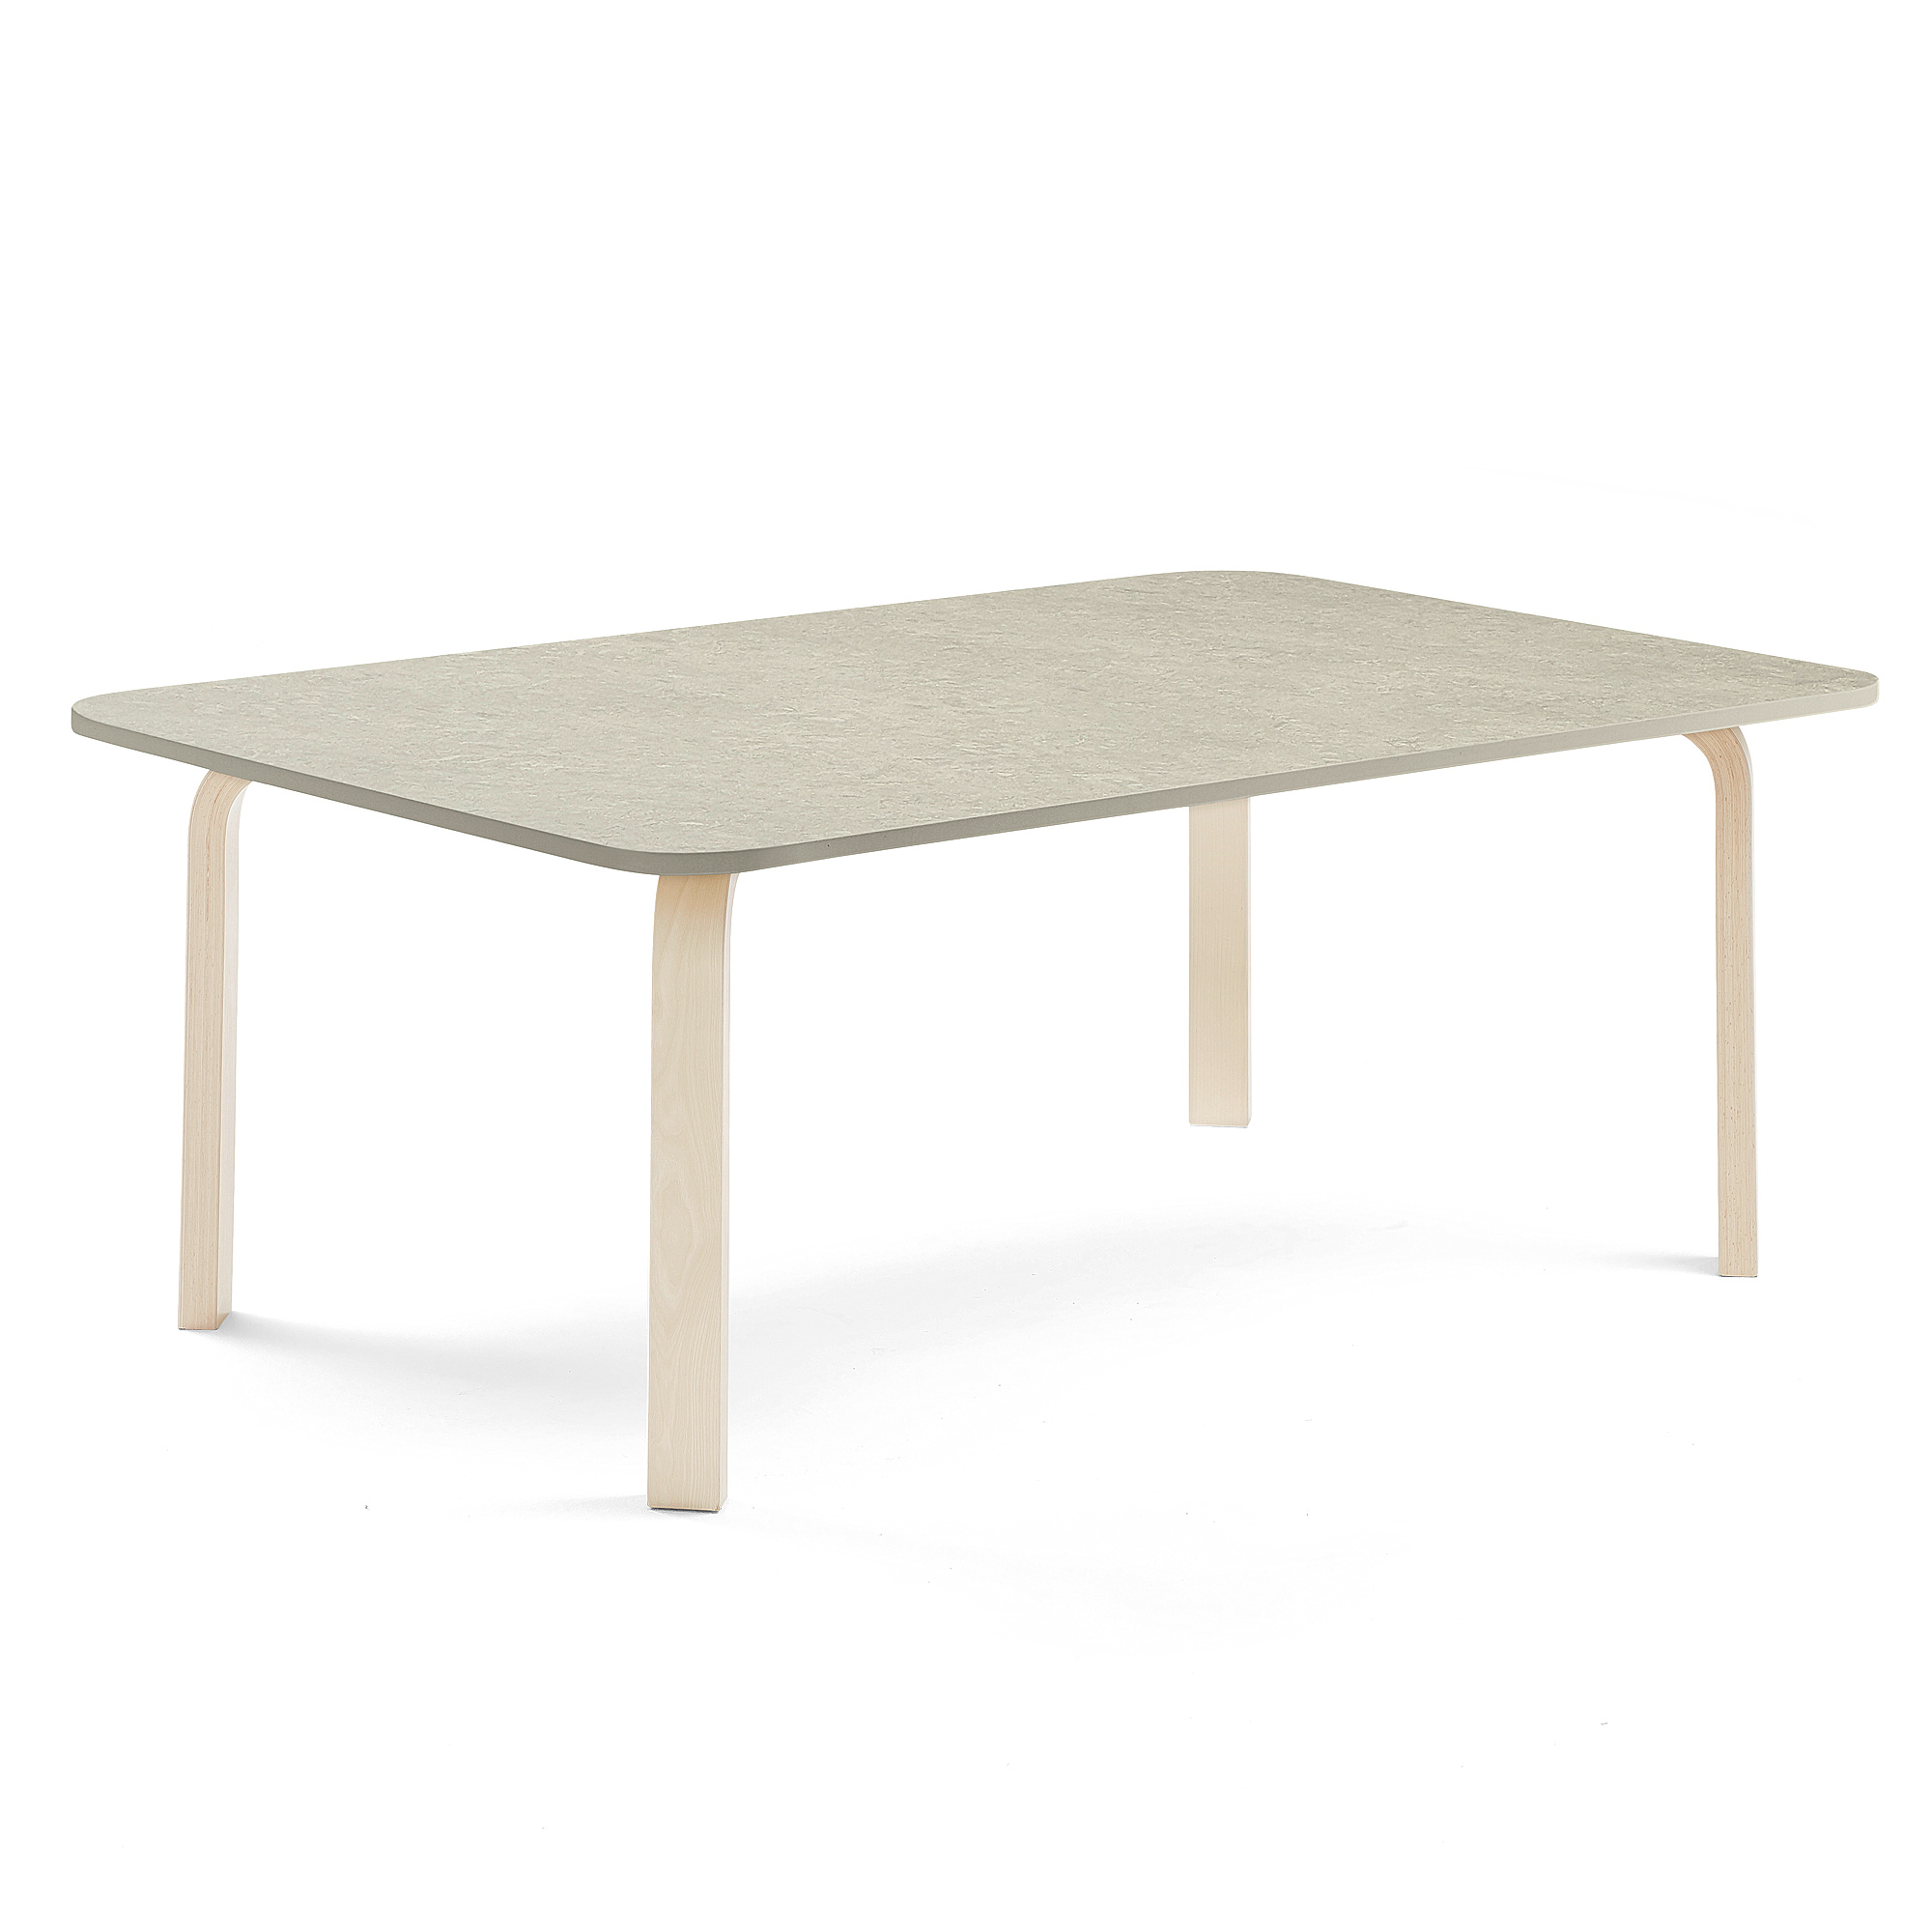 Stůl ELTON, 1800x800x530 mm, bříza, akustické linoleum, šedá